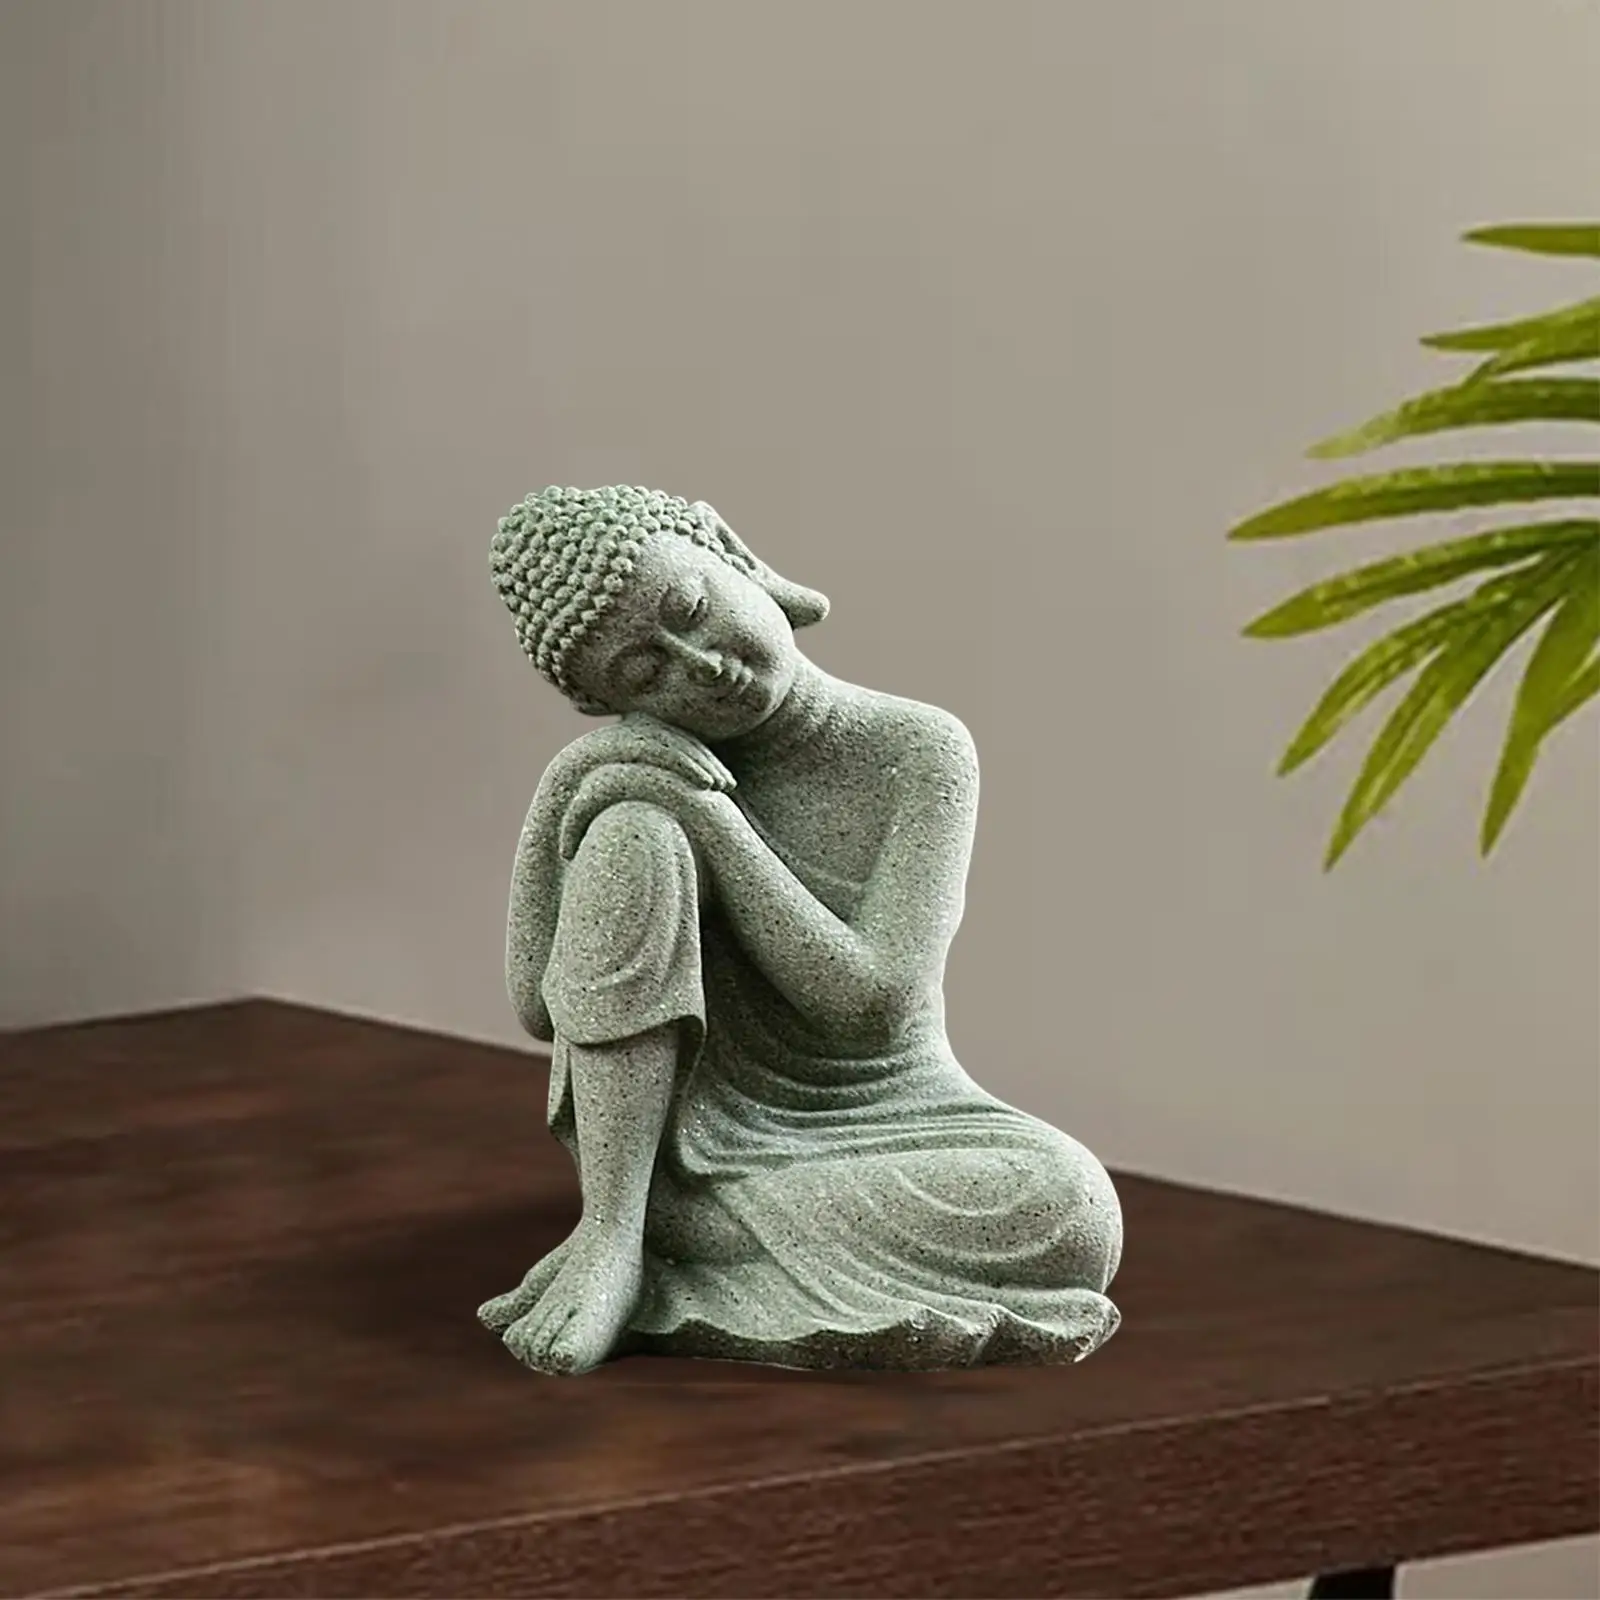 Sitting Buddha Statue Figurine, Gift Decorative zen Figurines Buddhism Decor